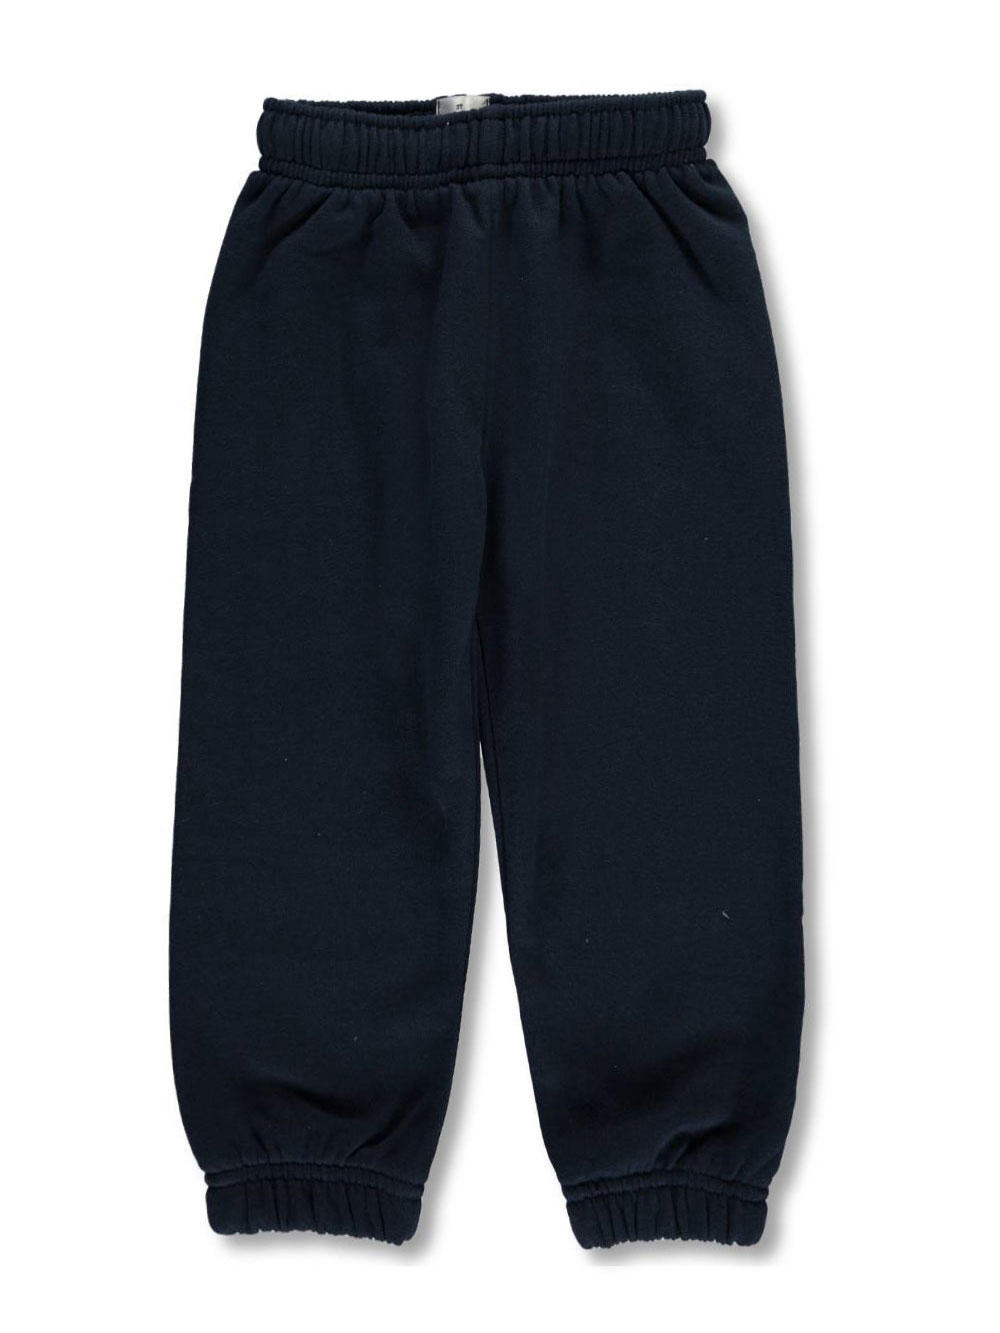 Size 2t Sweatpants for Boys